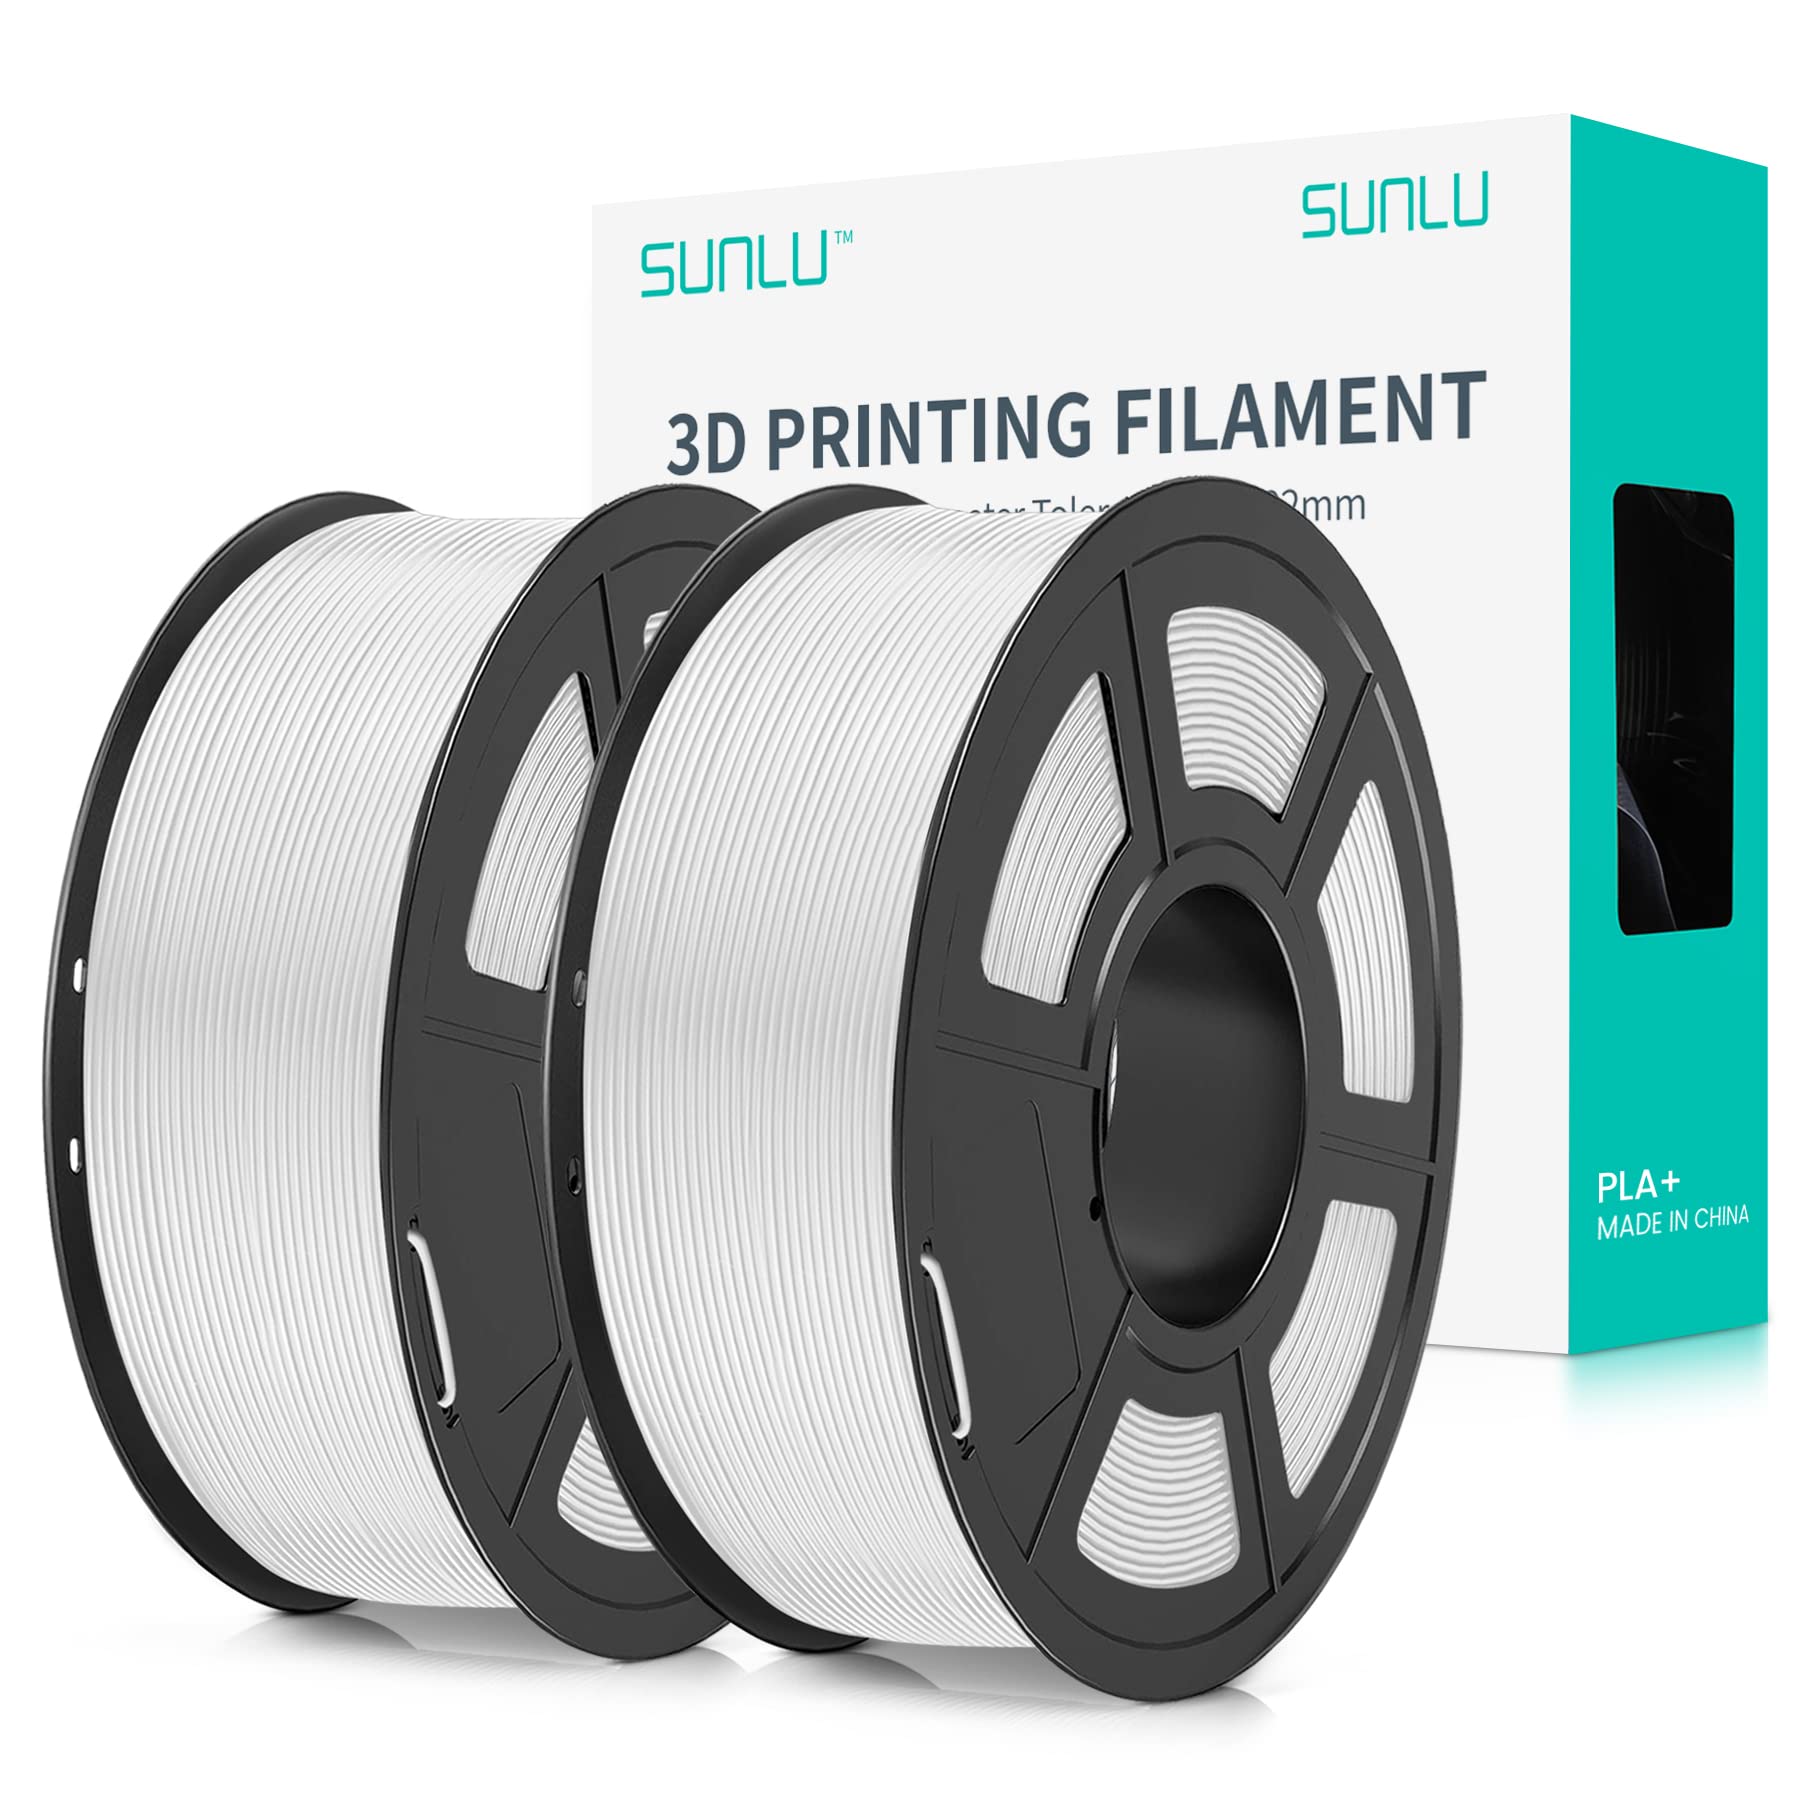 SUNLU PLA+ Filament 1.75mm 2KG, PLA Plus 3D Drucker Filament, Stärker belastbar, Neatly Wound,2 Spool 3D Druck PLA+ Filament, Maßgenauigkeit +/- 0.02mm, Weiß+Weiß